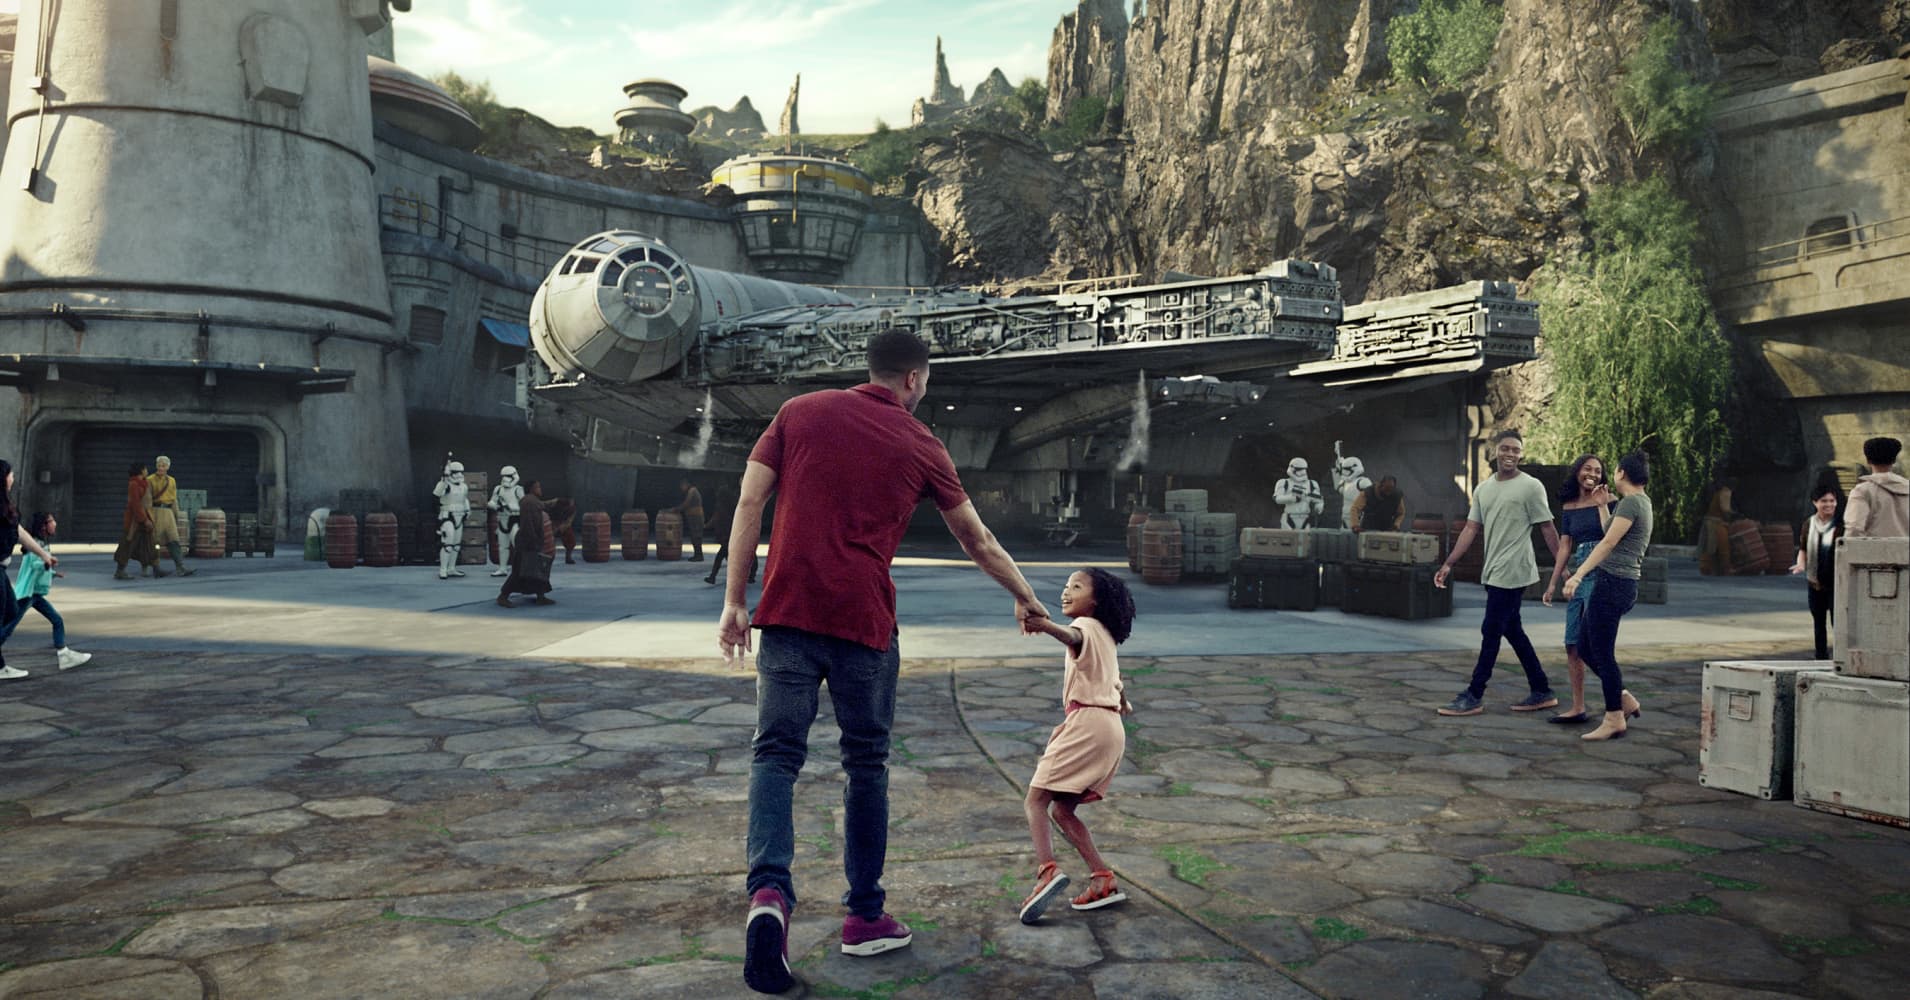 Disney is getting ready to open a massive, $1-billion Star Wars theme park in California